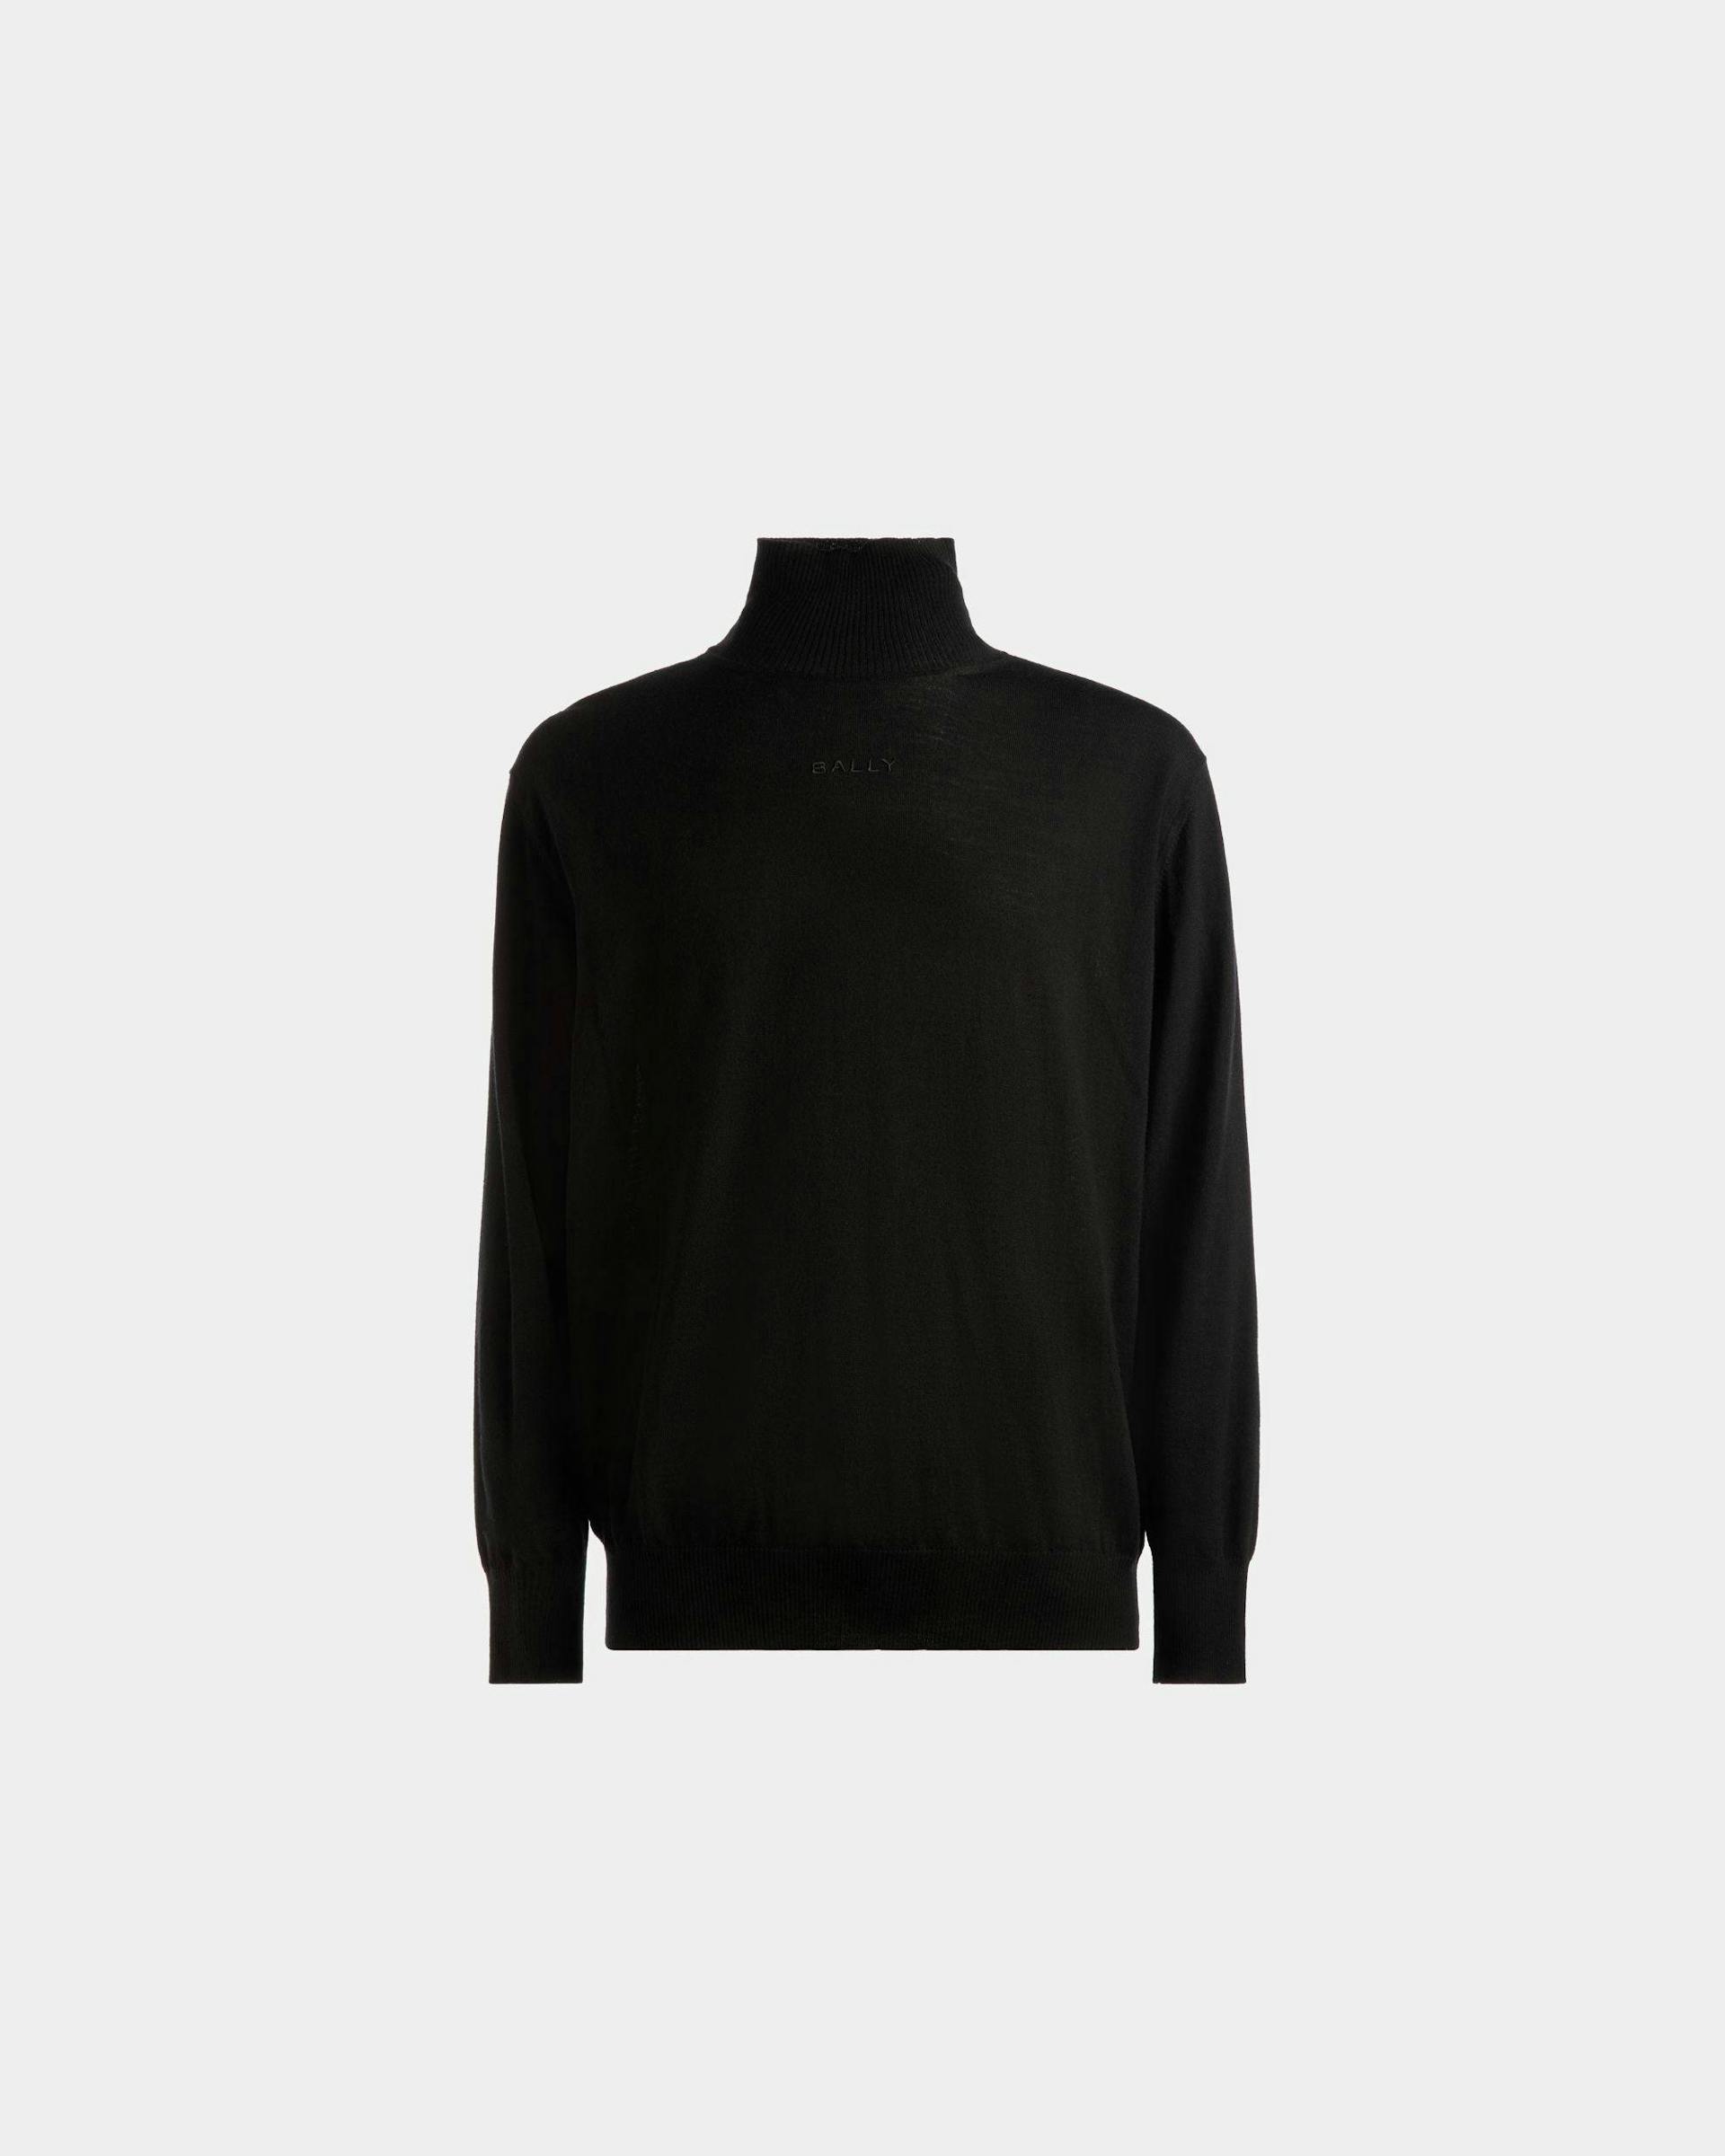 Men's Roll Neck Sweater In Black Wool | Bally | Still Life Front